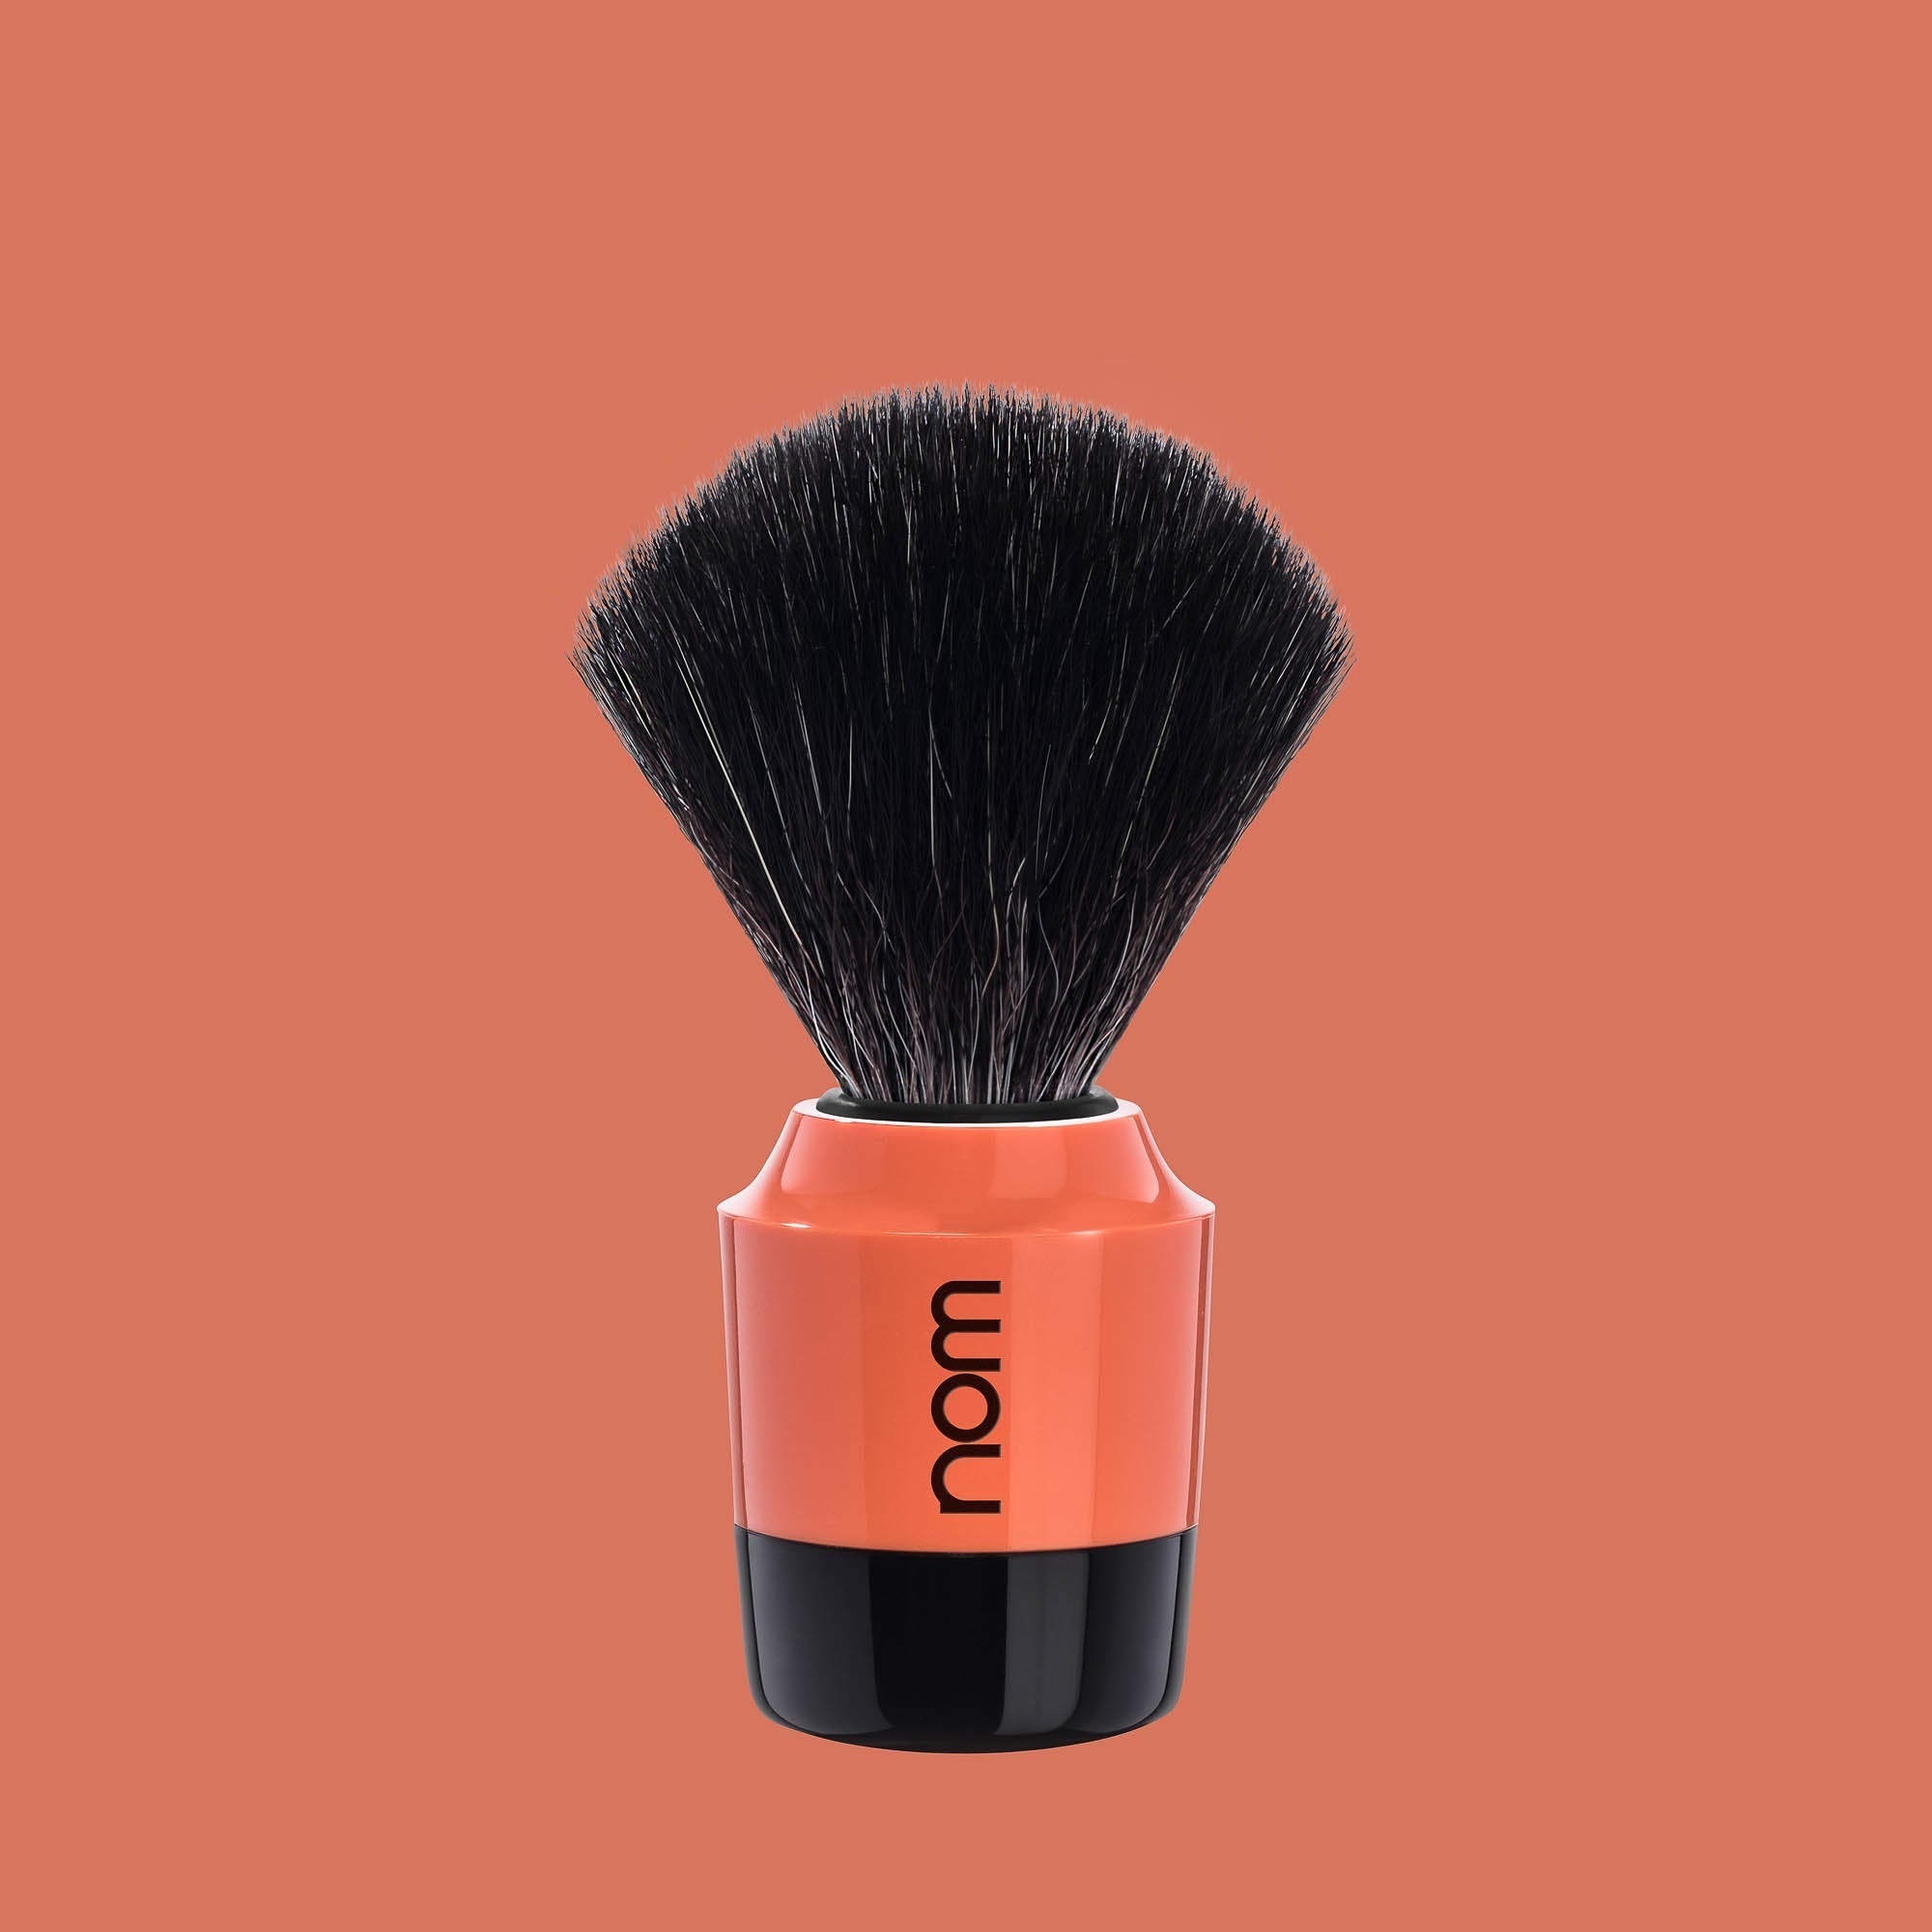 nom MARTEN, Plastic Black/Coral, Black Fibre Shaving Brush